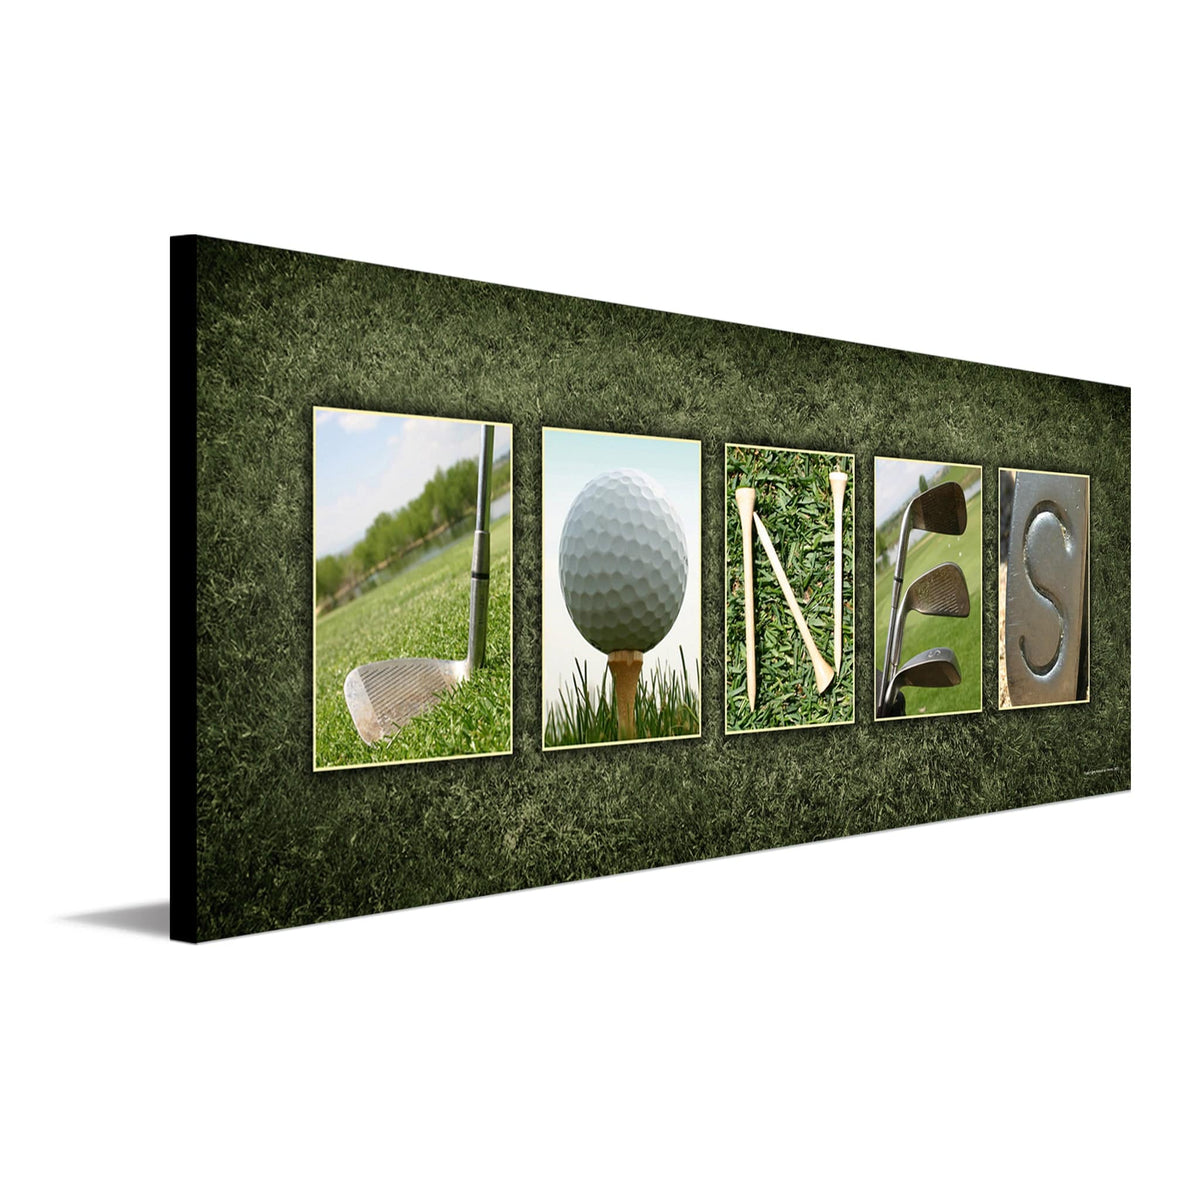 Personal-Prints Golf Name Art Print.